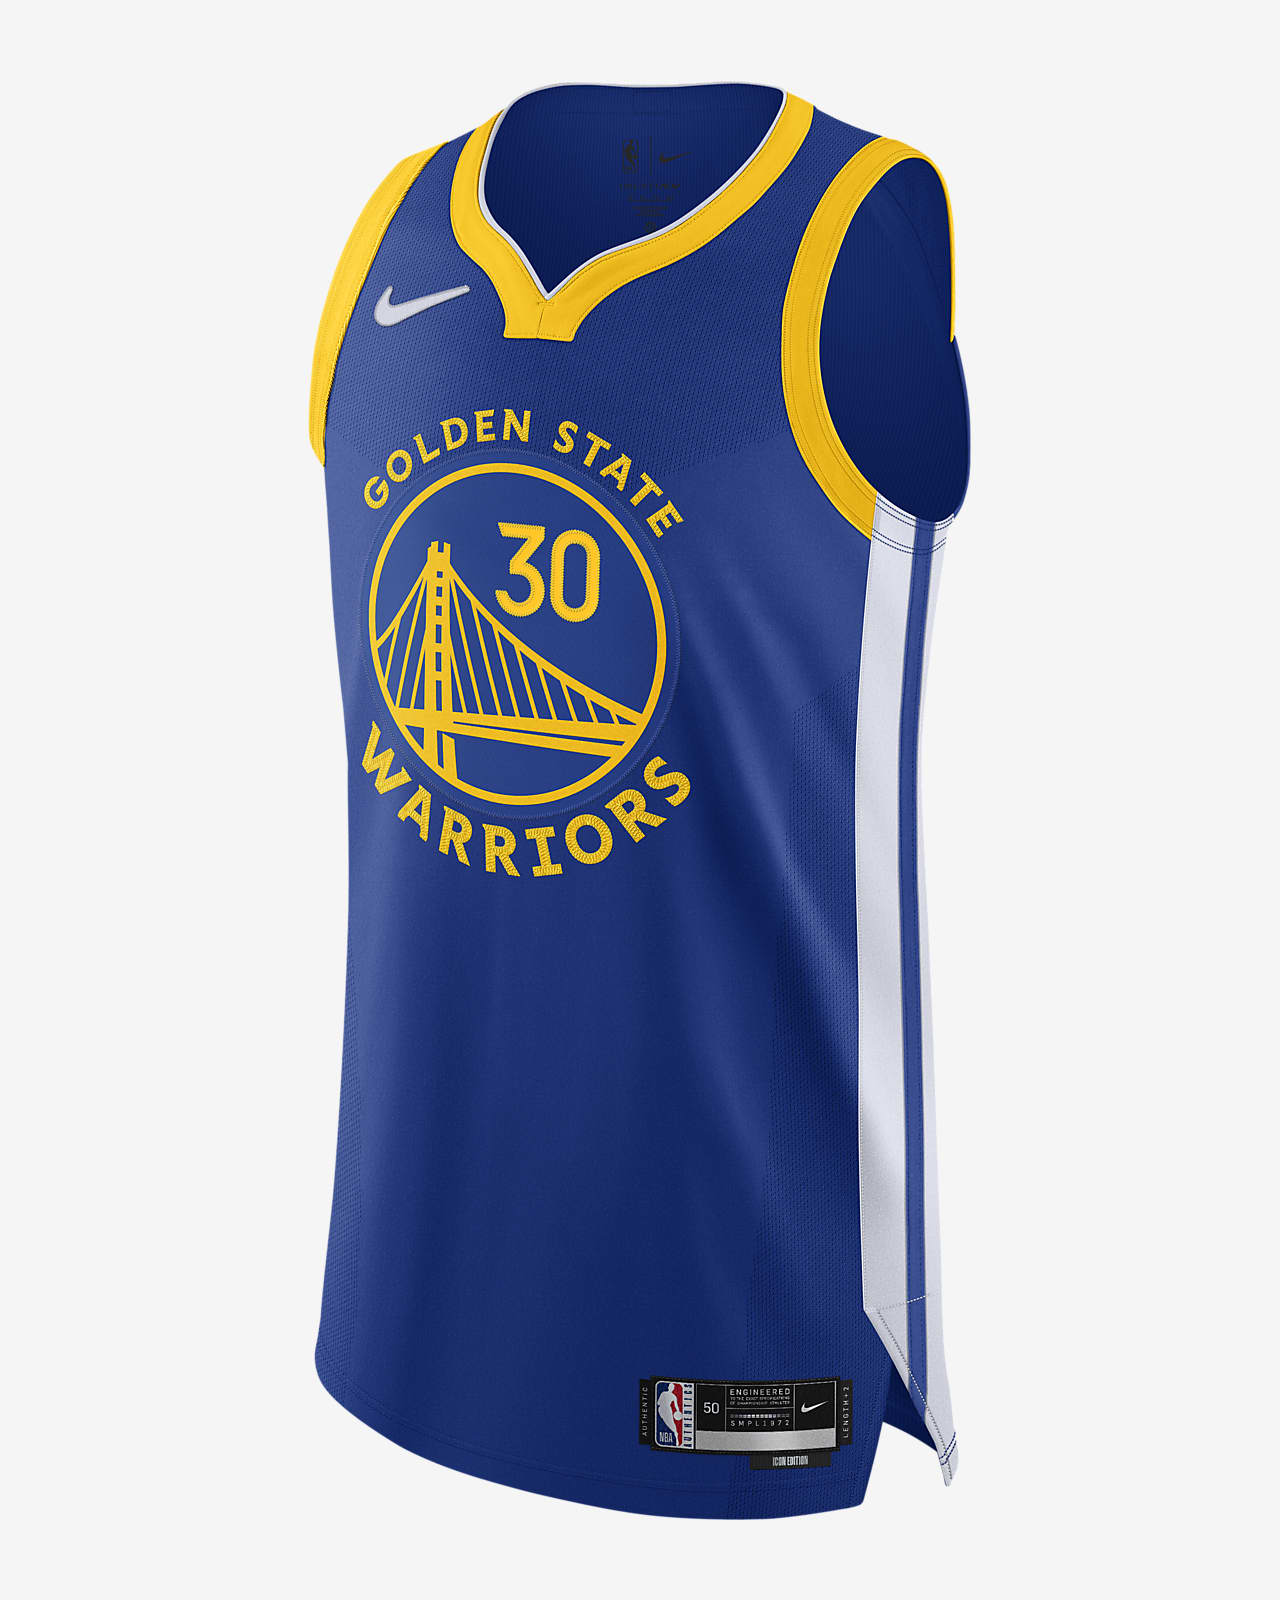 2020 赛季金州勇士队 (Stephen Curry) Icon Edition Nike NBA Authentic Jersey 男子速干球衣